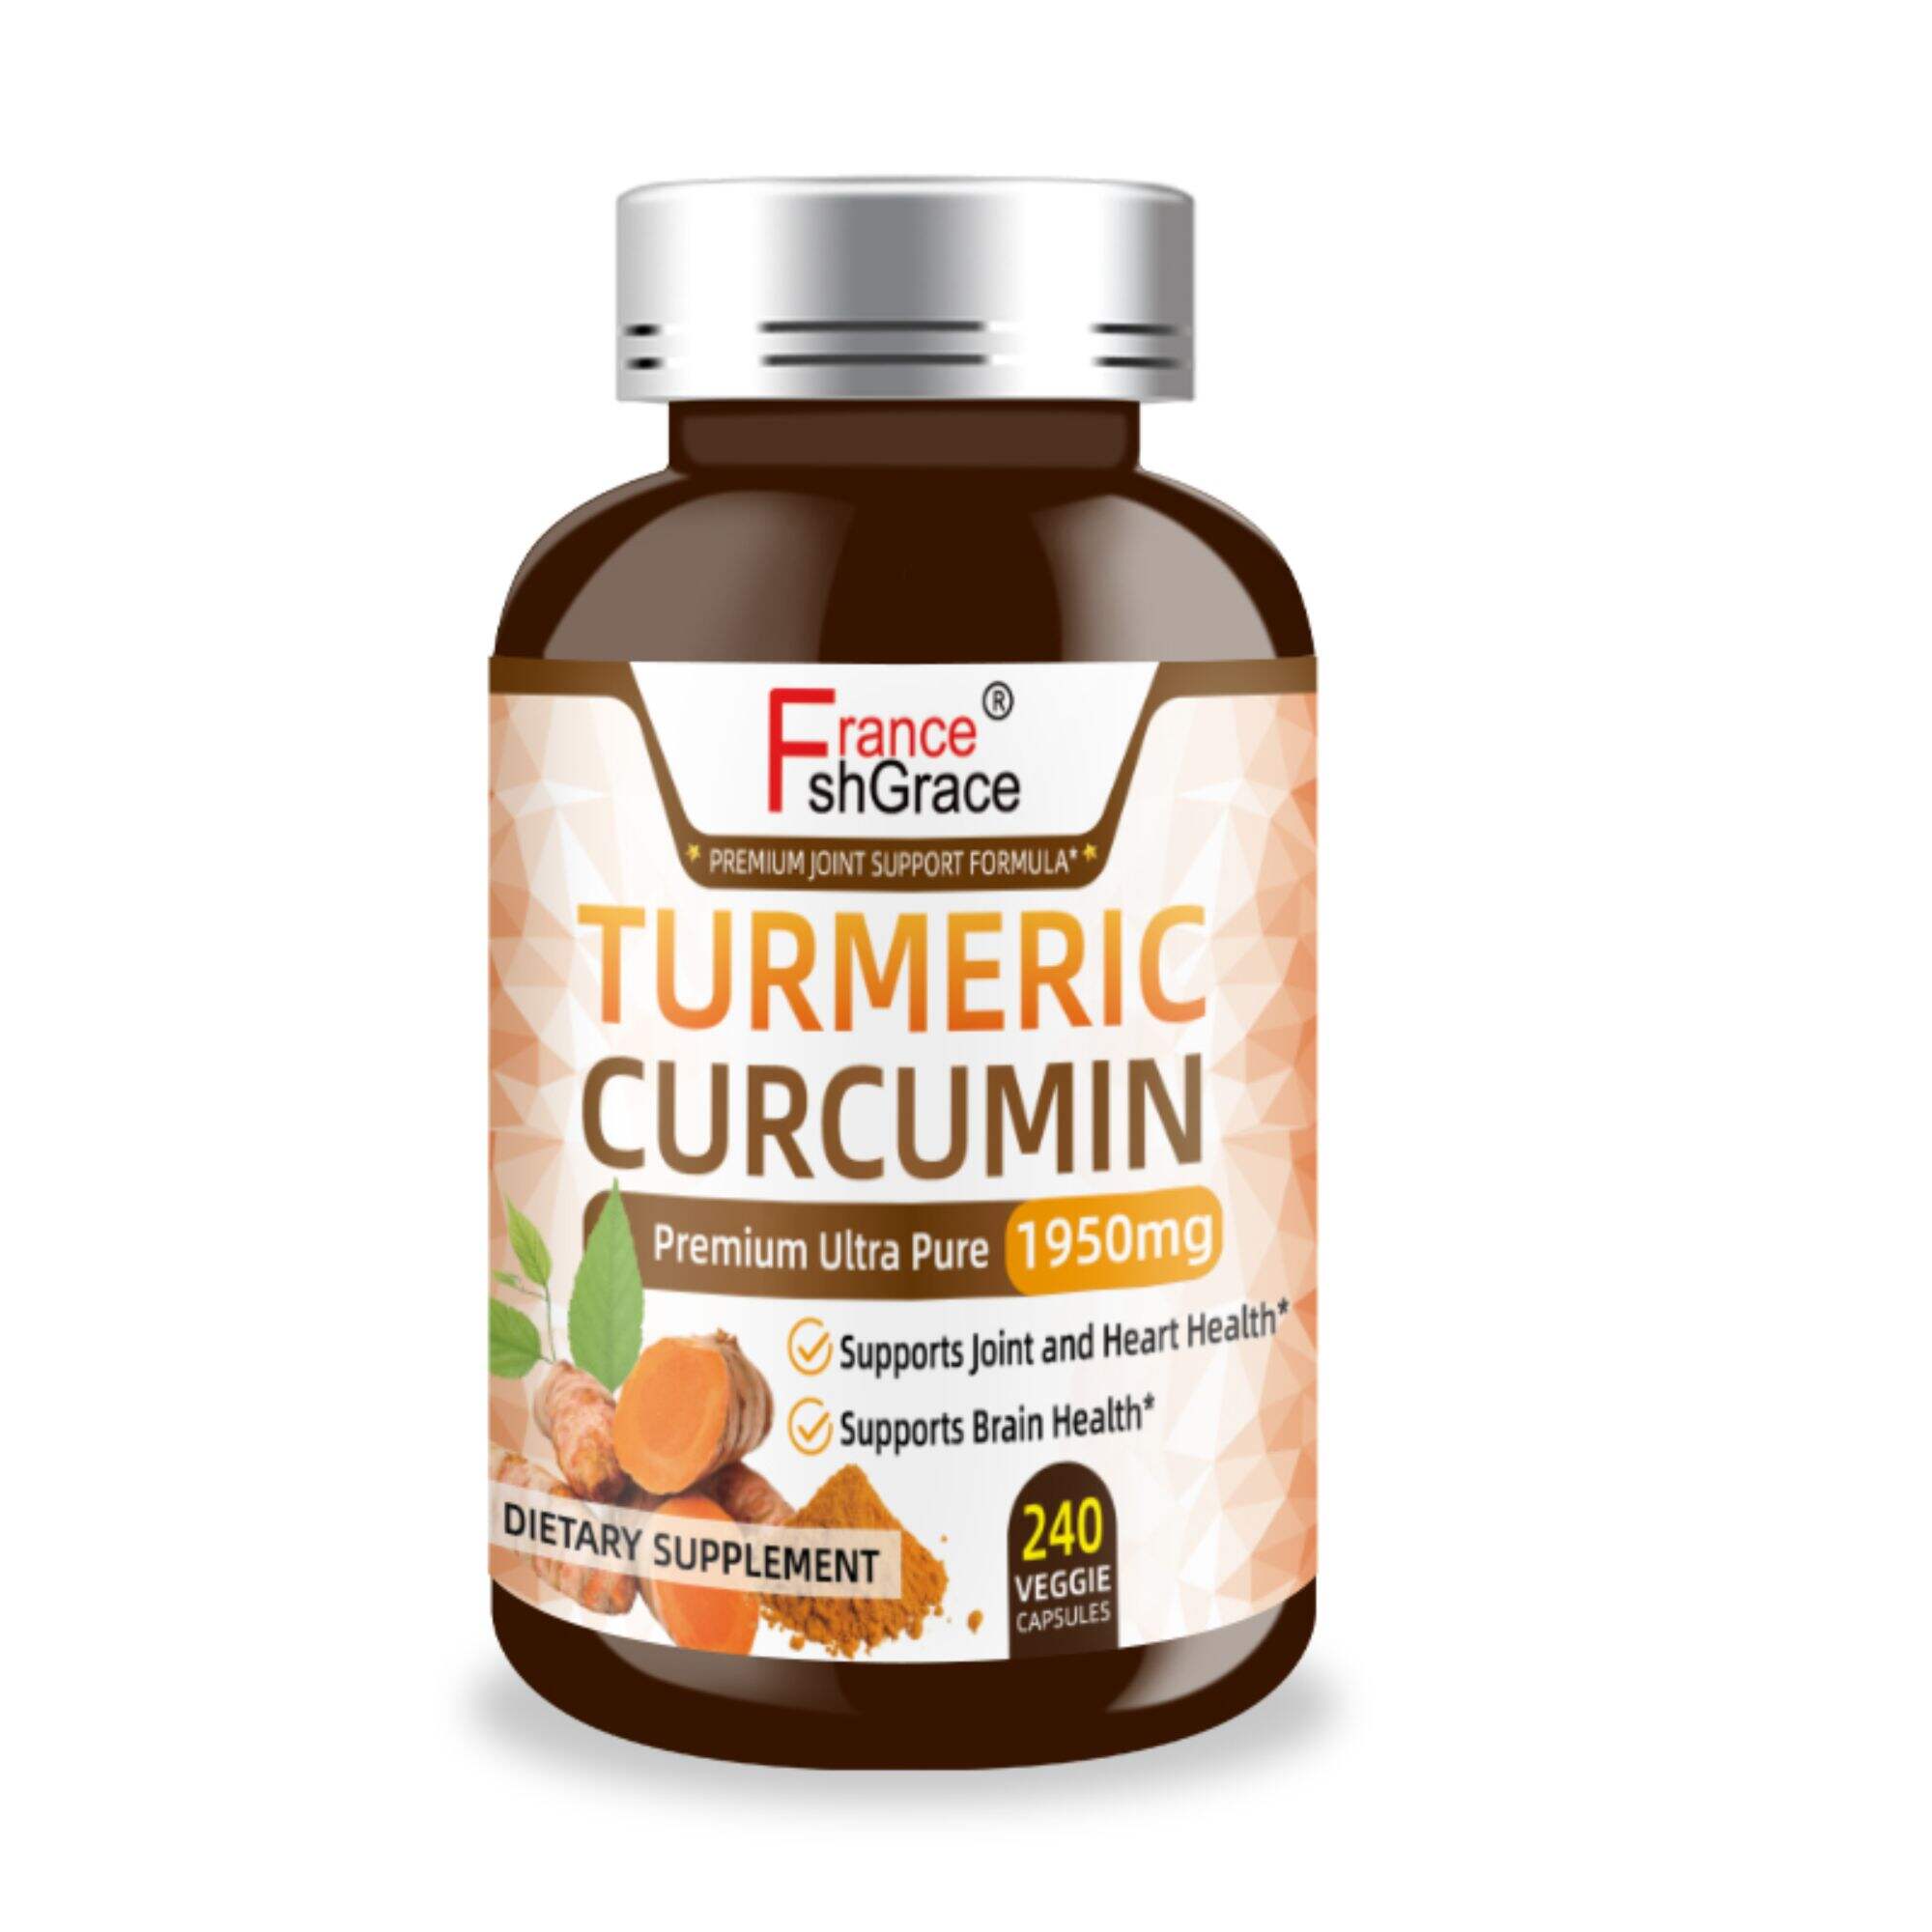 Turmeric Curcumin 240 Capsules with BioPerine 95% Curcuminoids 1950mg